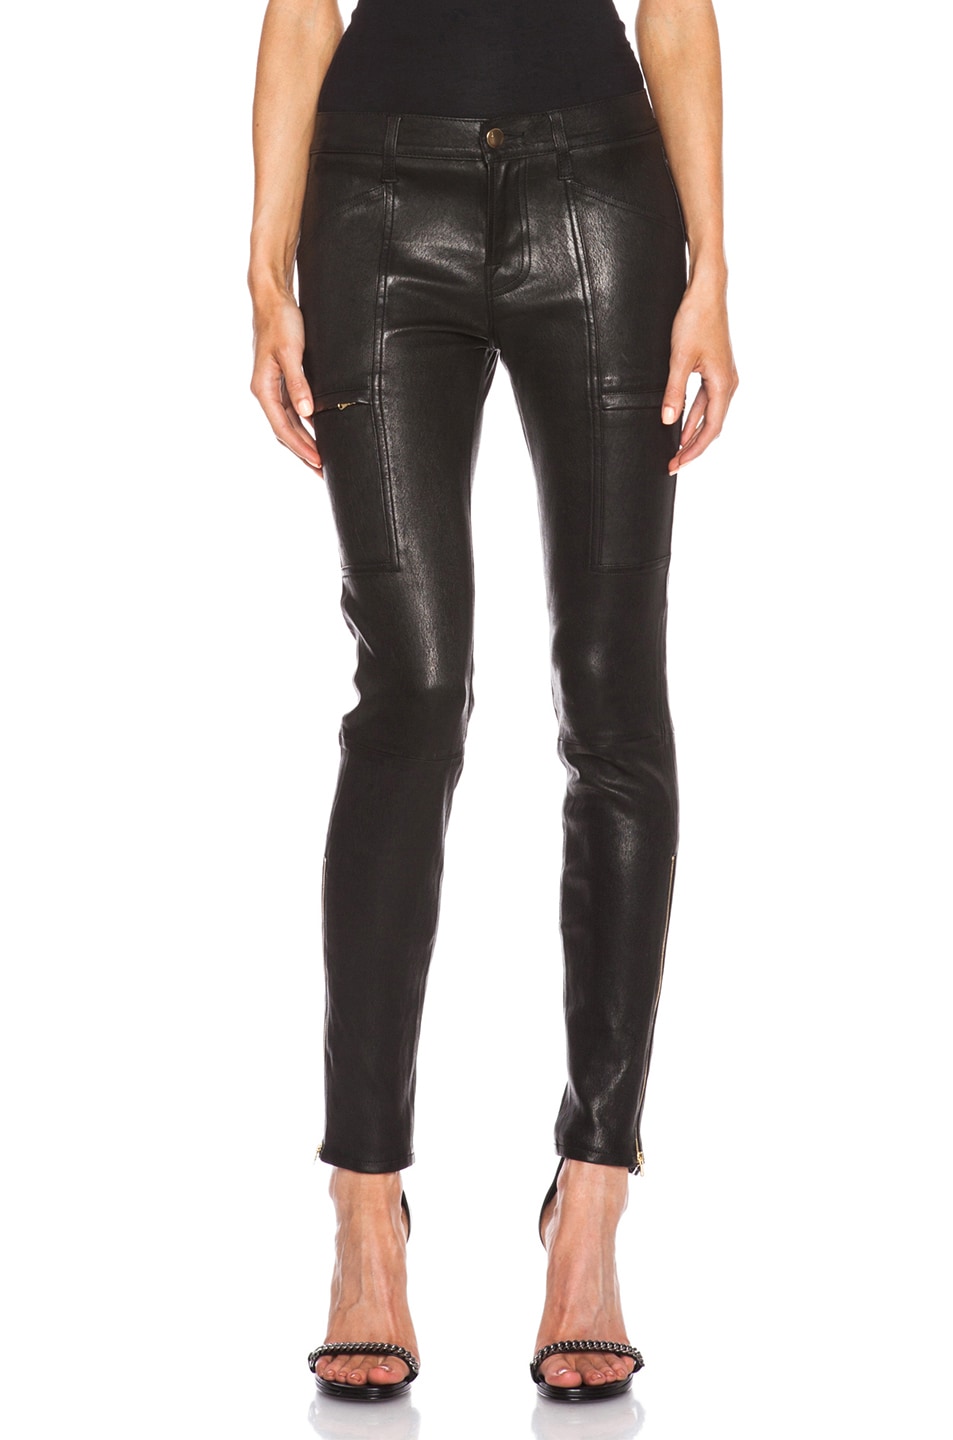 J Brand Cassidy Leather Jean in Noir | FWRD